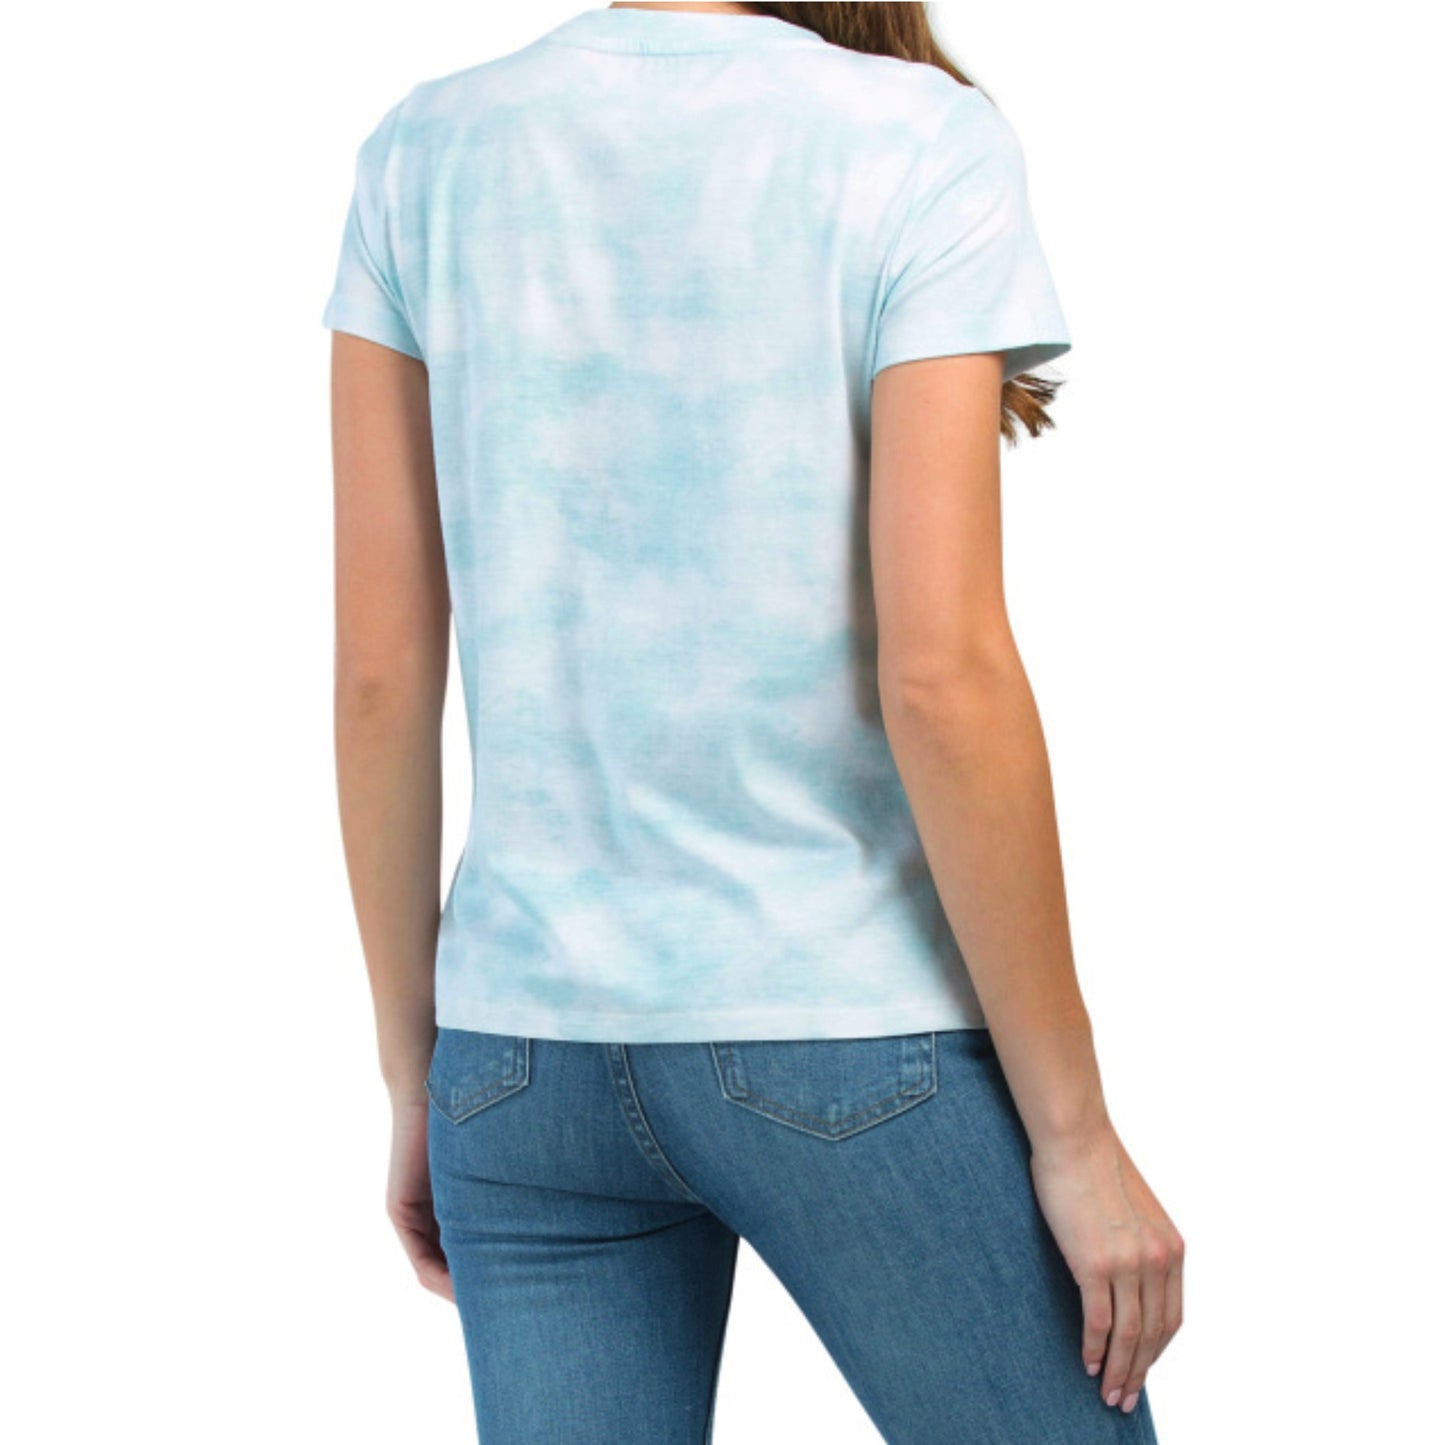 Rae Dunn Women's Blessed Graphic Print Tie Dye Cotton T-shirt